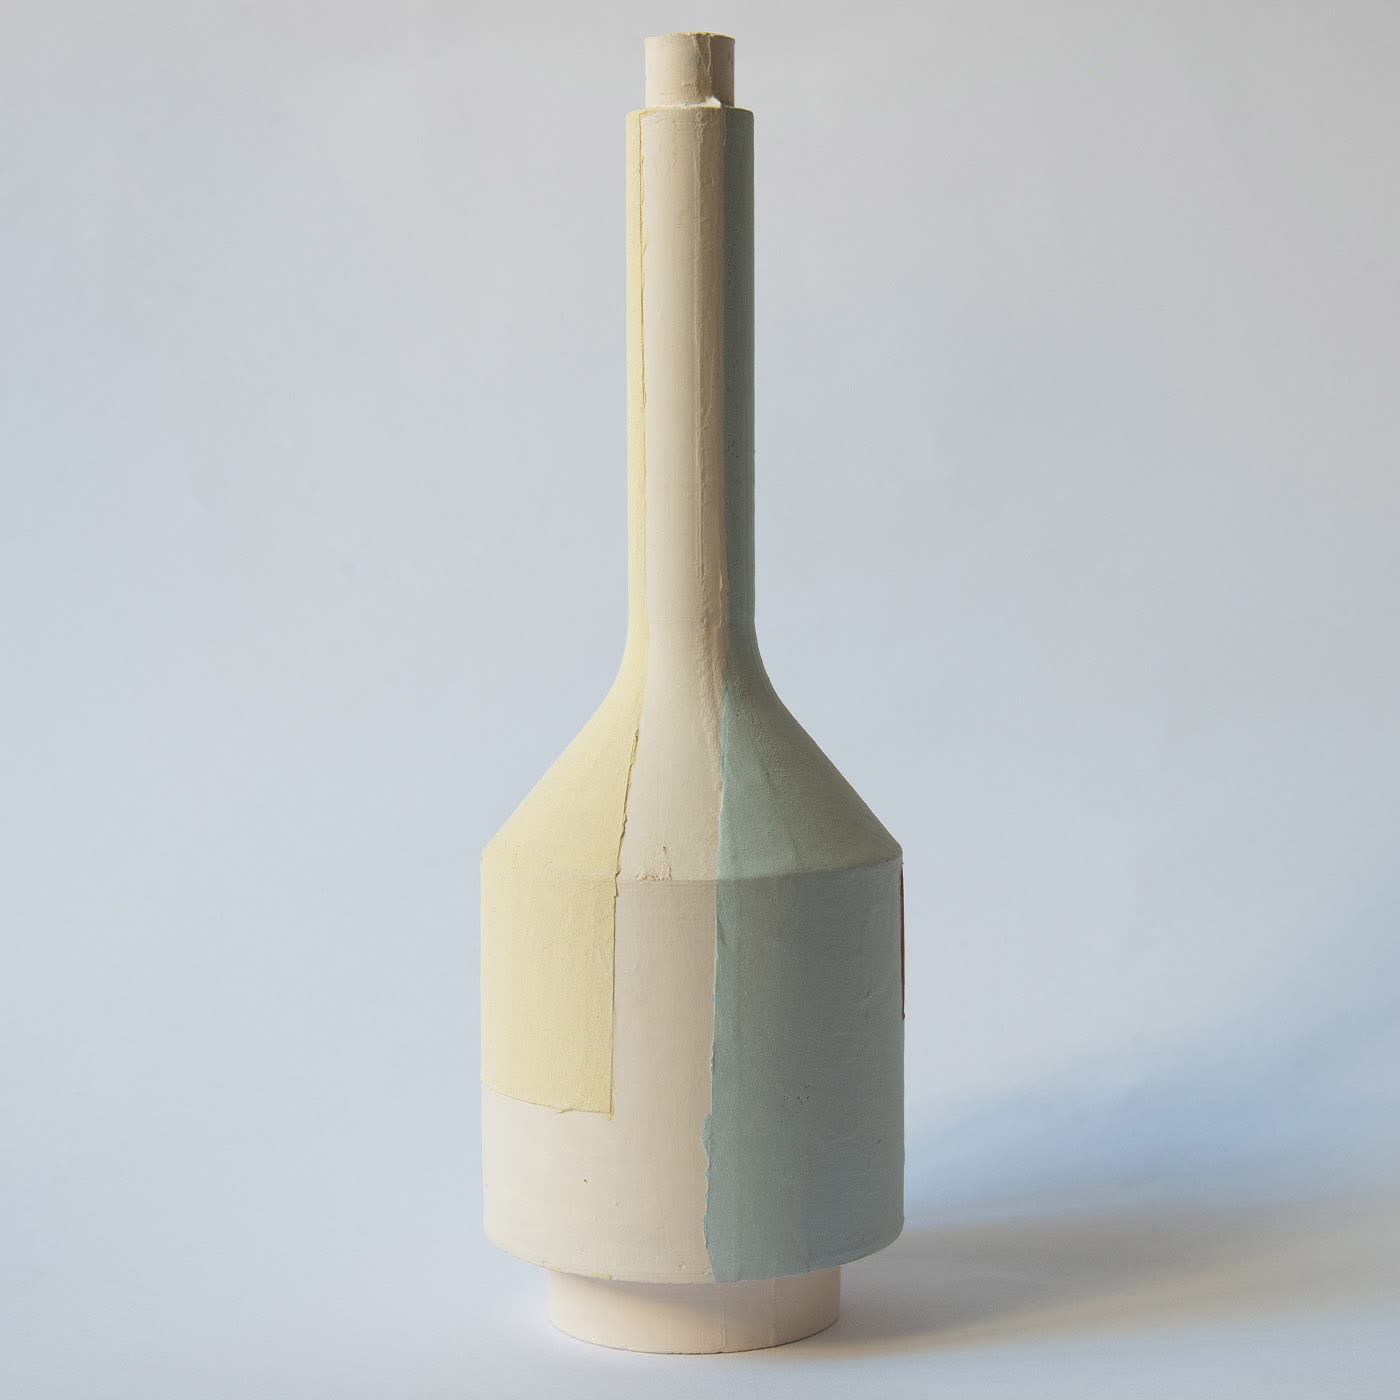 Intonaco Azure&Red Single-Stem Vase - Bota Fogo